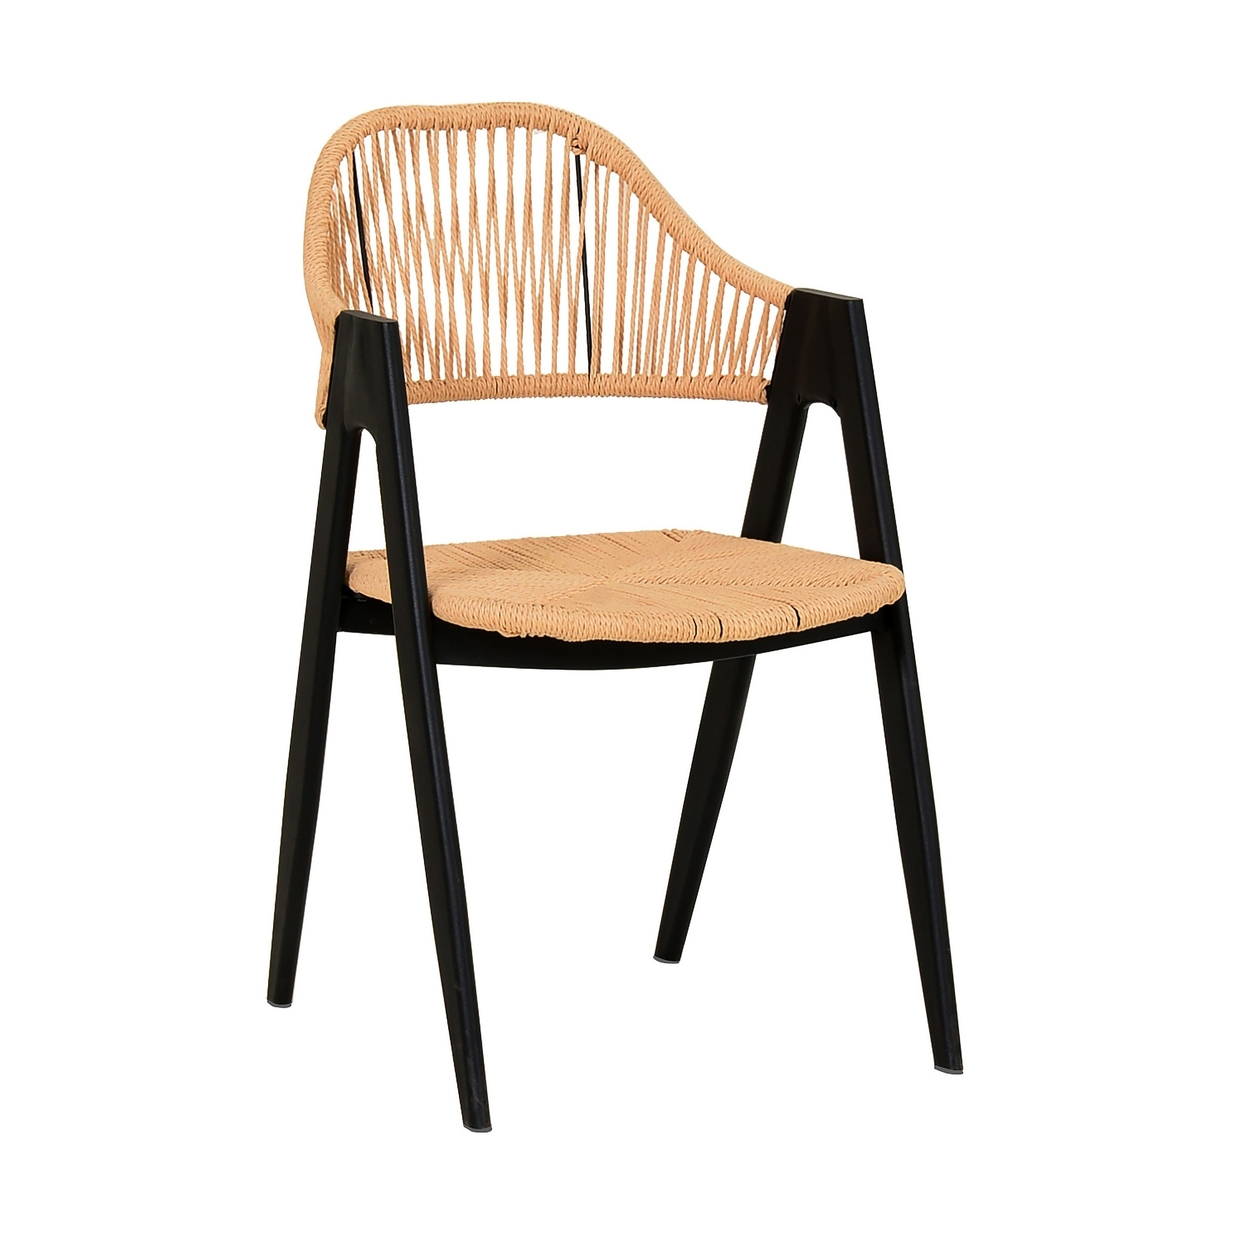 19 Inch Dining Chair, Set Of 2, Natural Rattan Weave, Black Metal Frame- Saltoro Sherpi